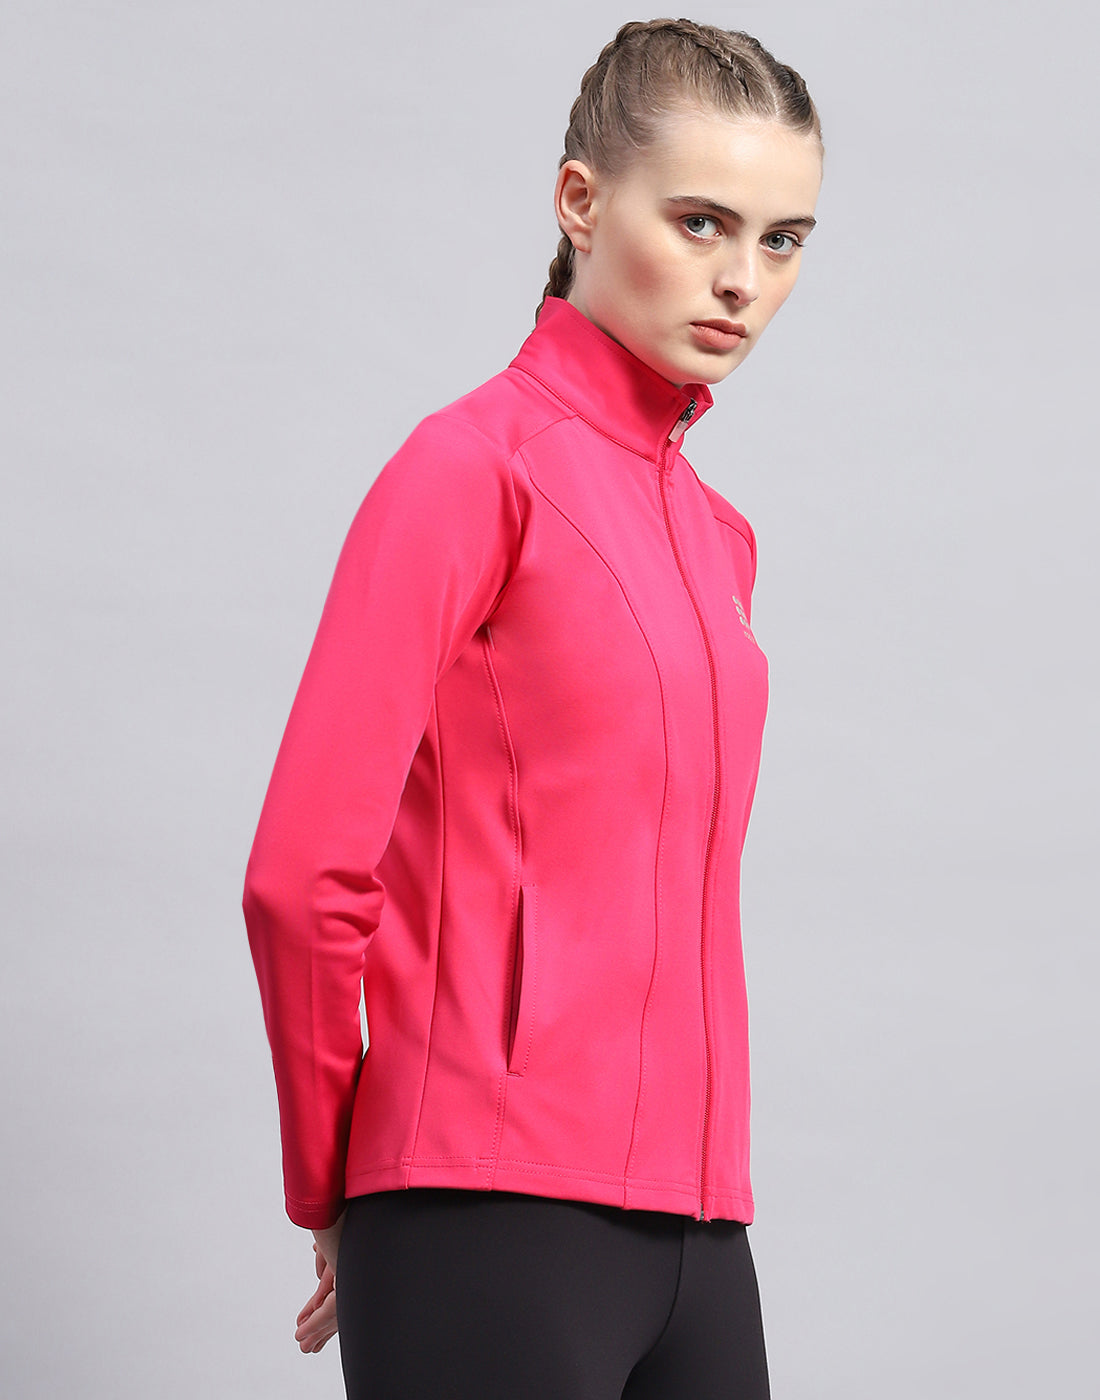 Women Pink Solid Collar Full Sleeve Top